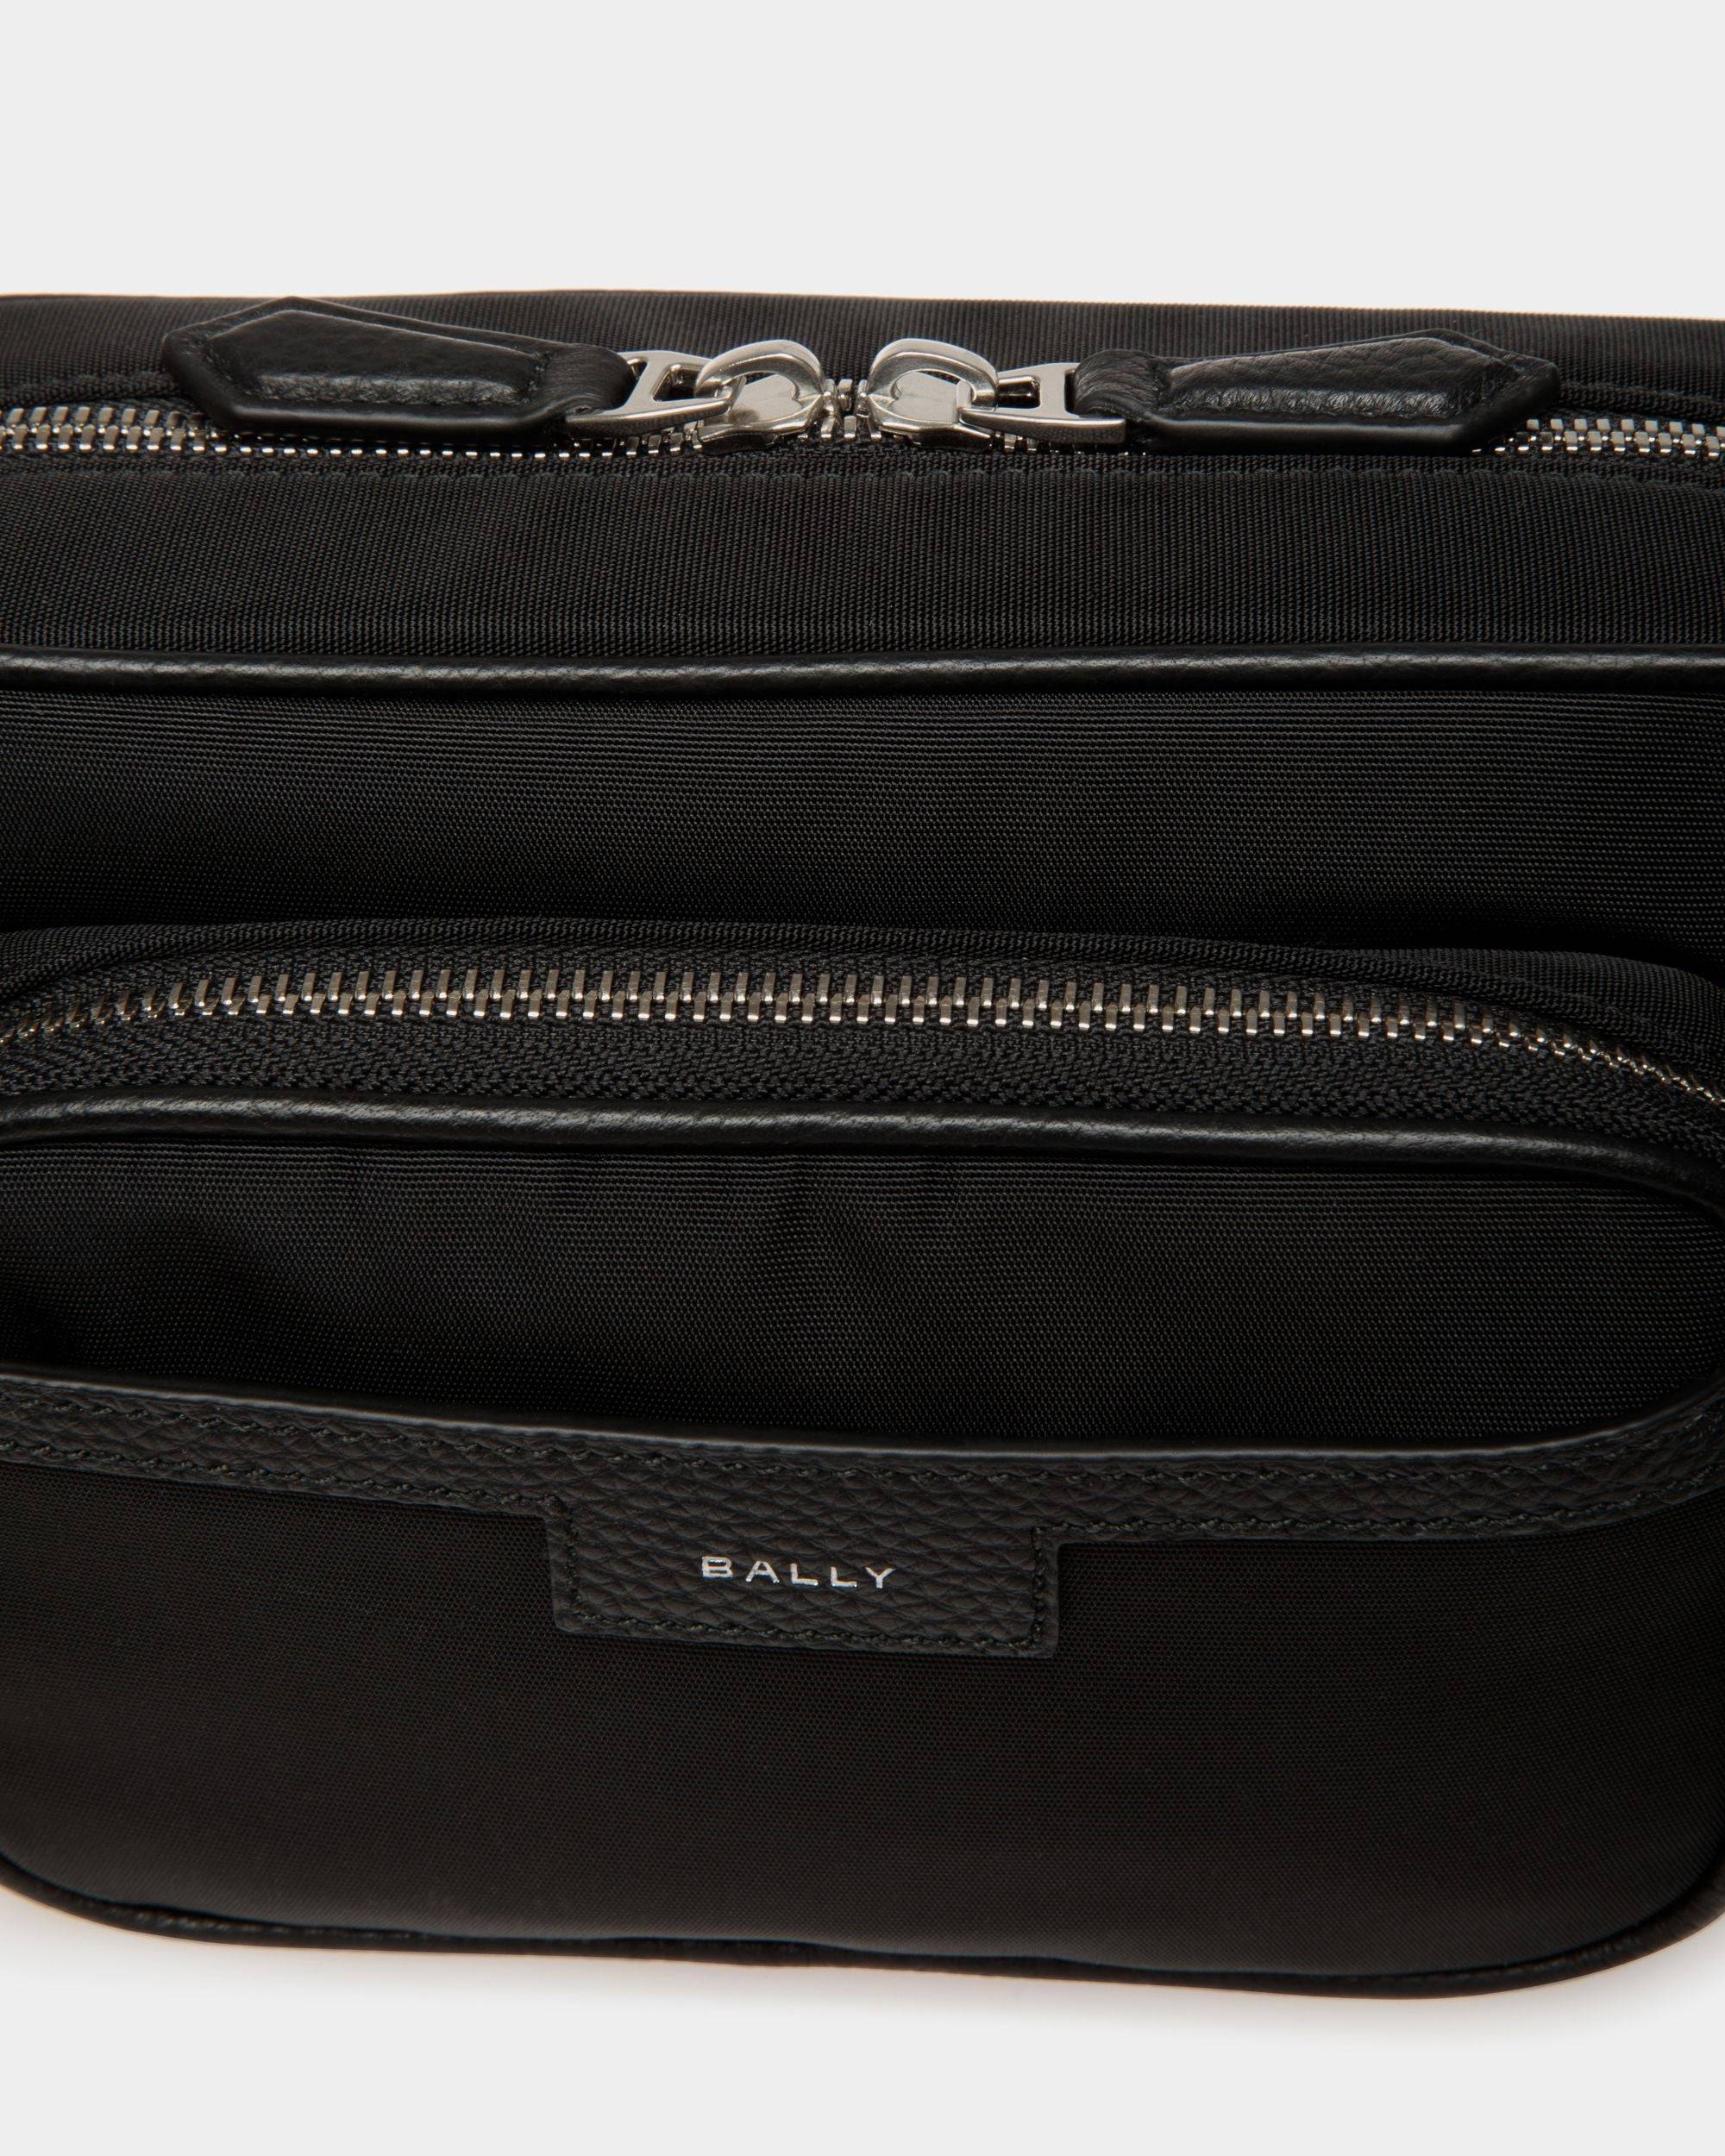 Code | Men's Crossbody Bag in Black Nylon | Bally | Still Life Detail